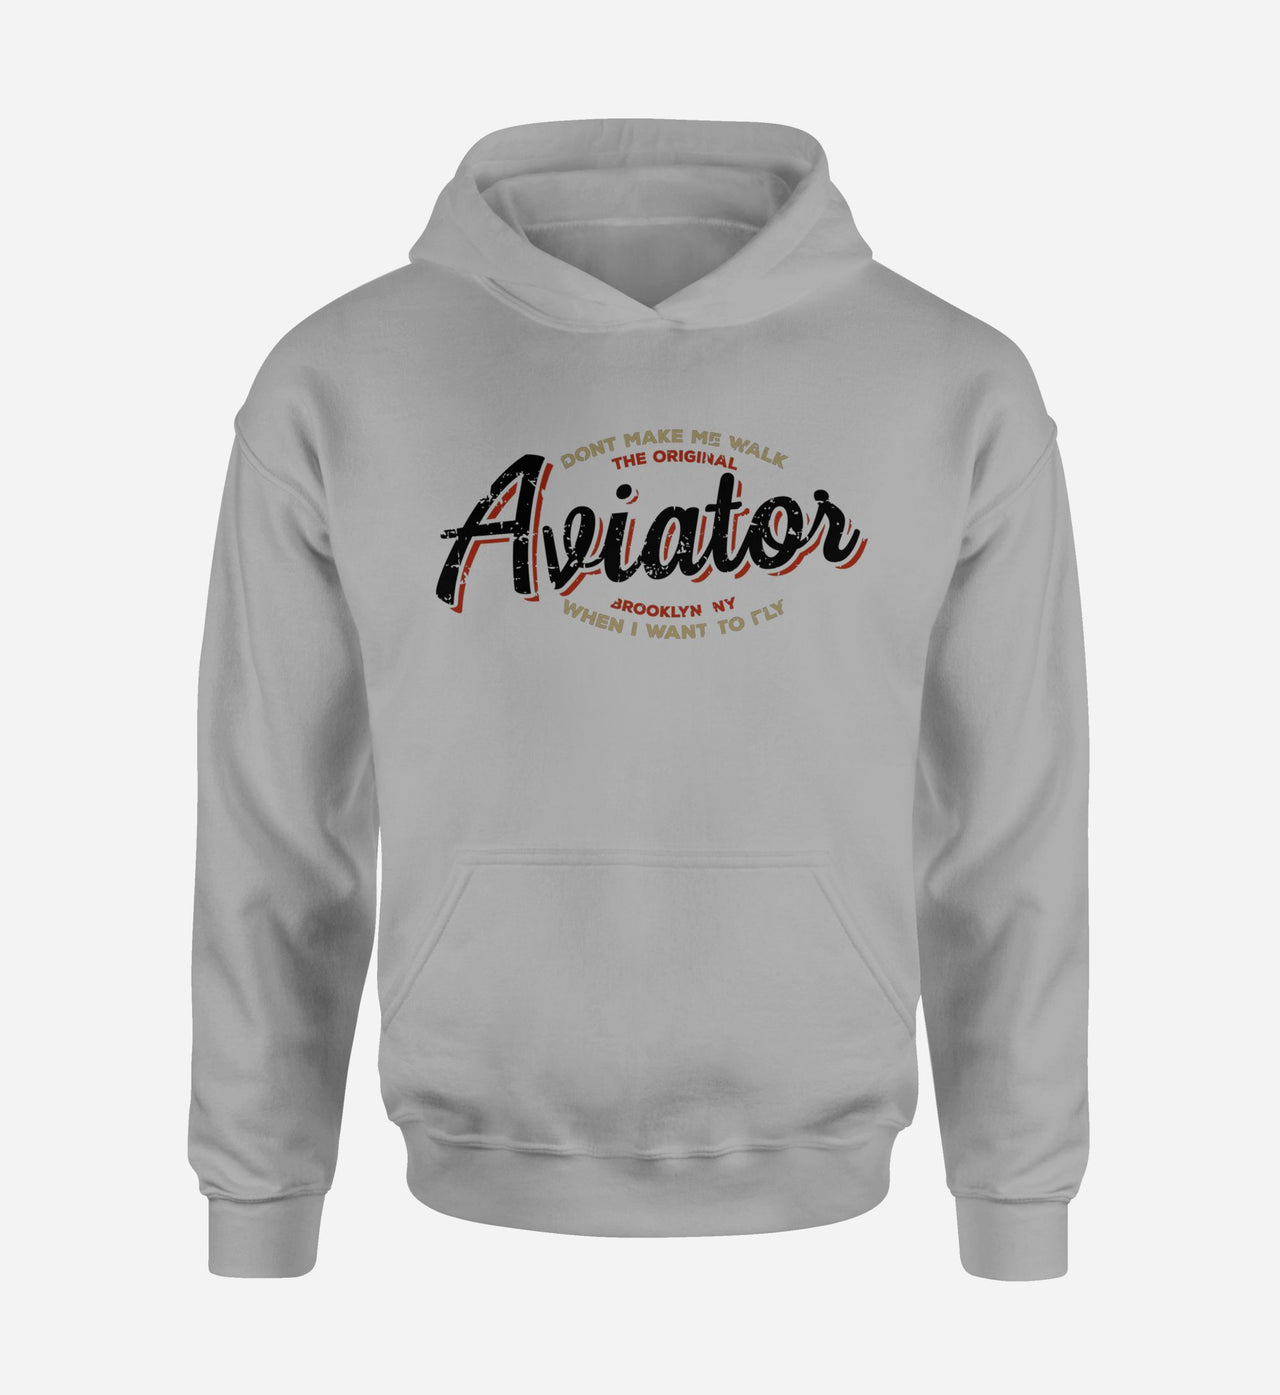 Aviator - Dont Make Me Walk Designed Hoodies